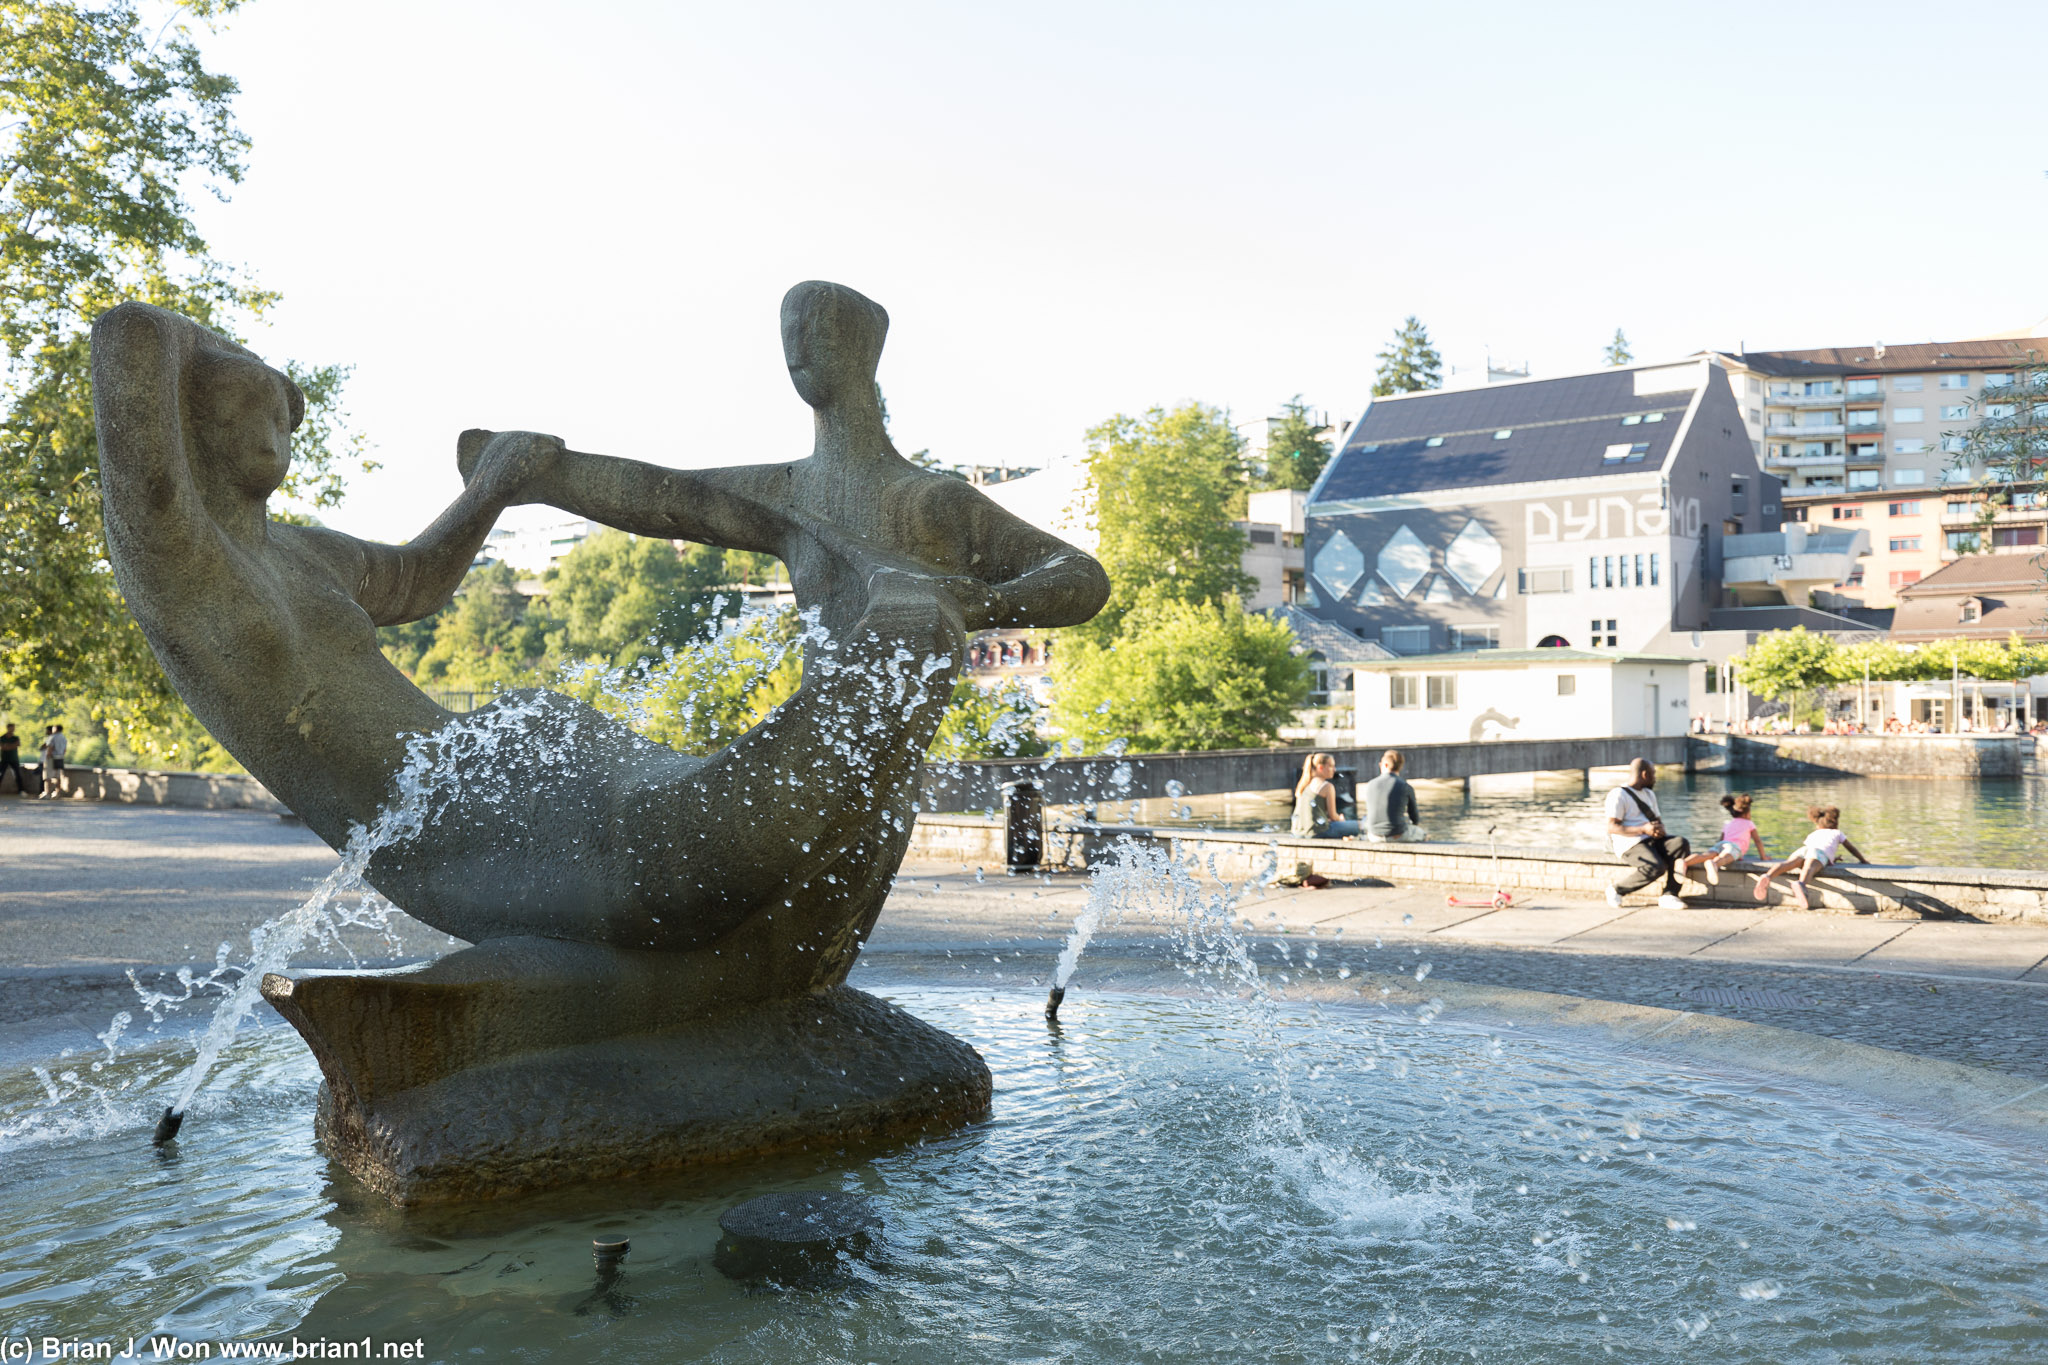 Random statue in a water fountain at Platzpitz.